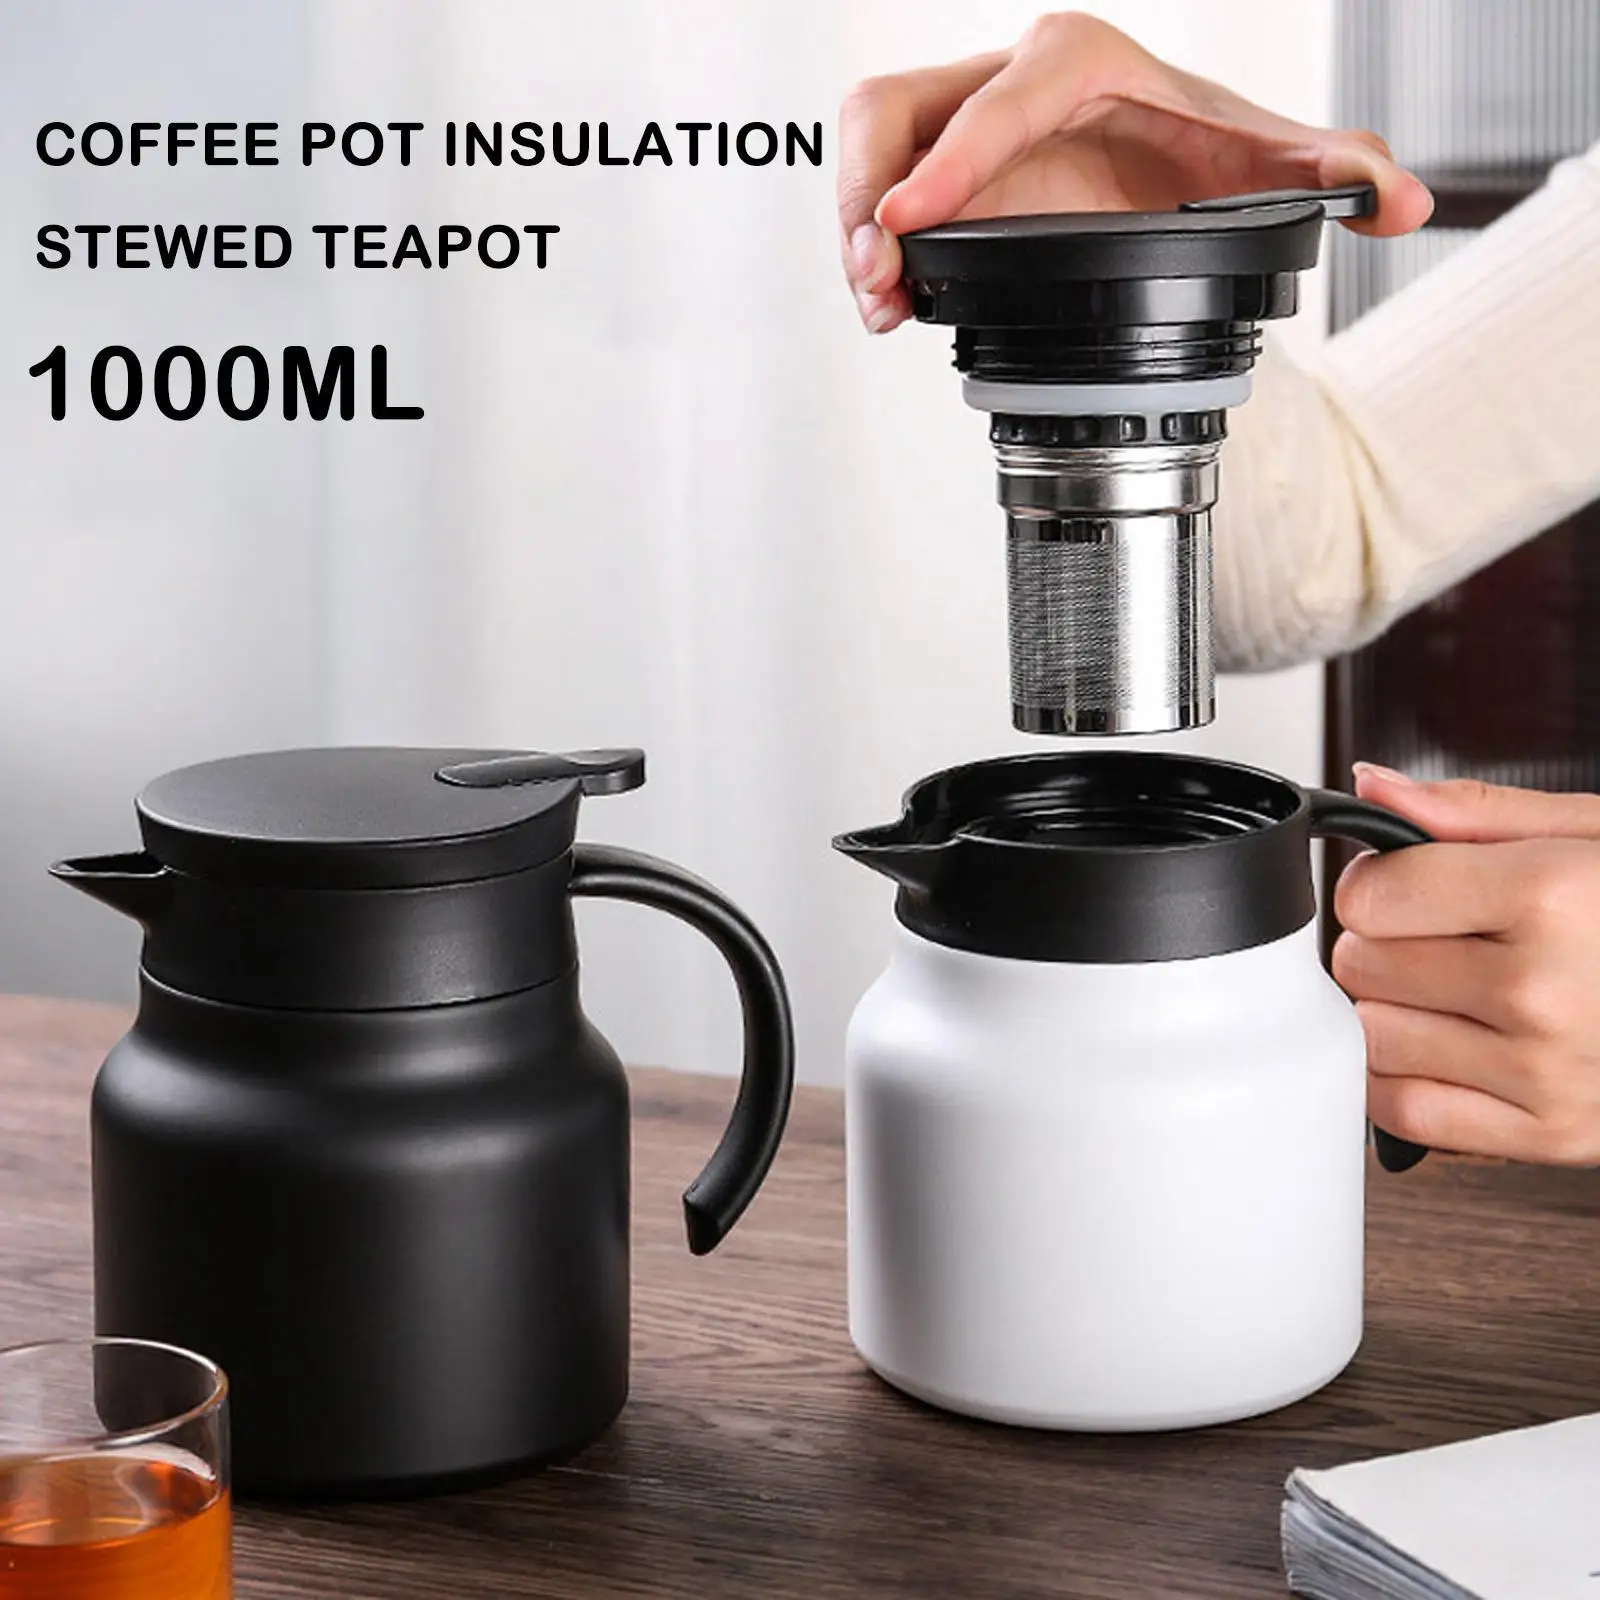 

1000ml Stainless Steel Coffee Pot Insulation Stewed Teapot Home Office Stewed Pot Teapot Tea Stuffed Teapot Kettle Coffee Pot